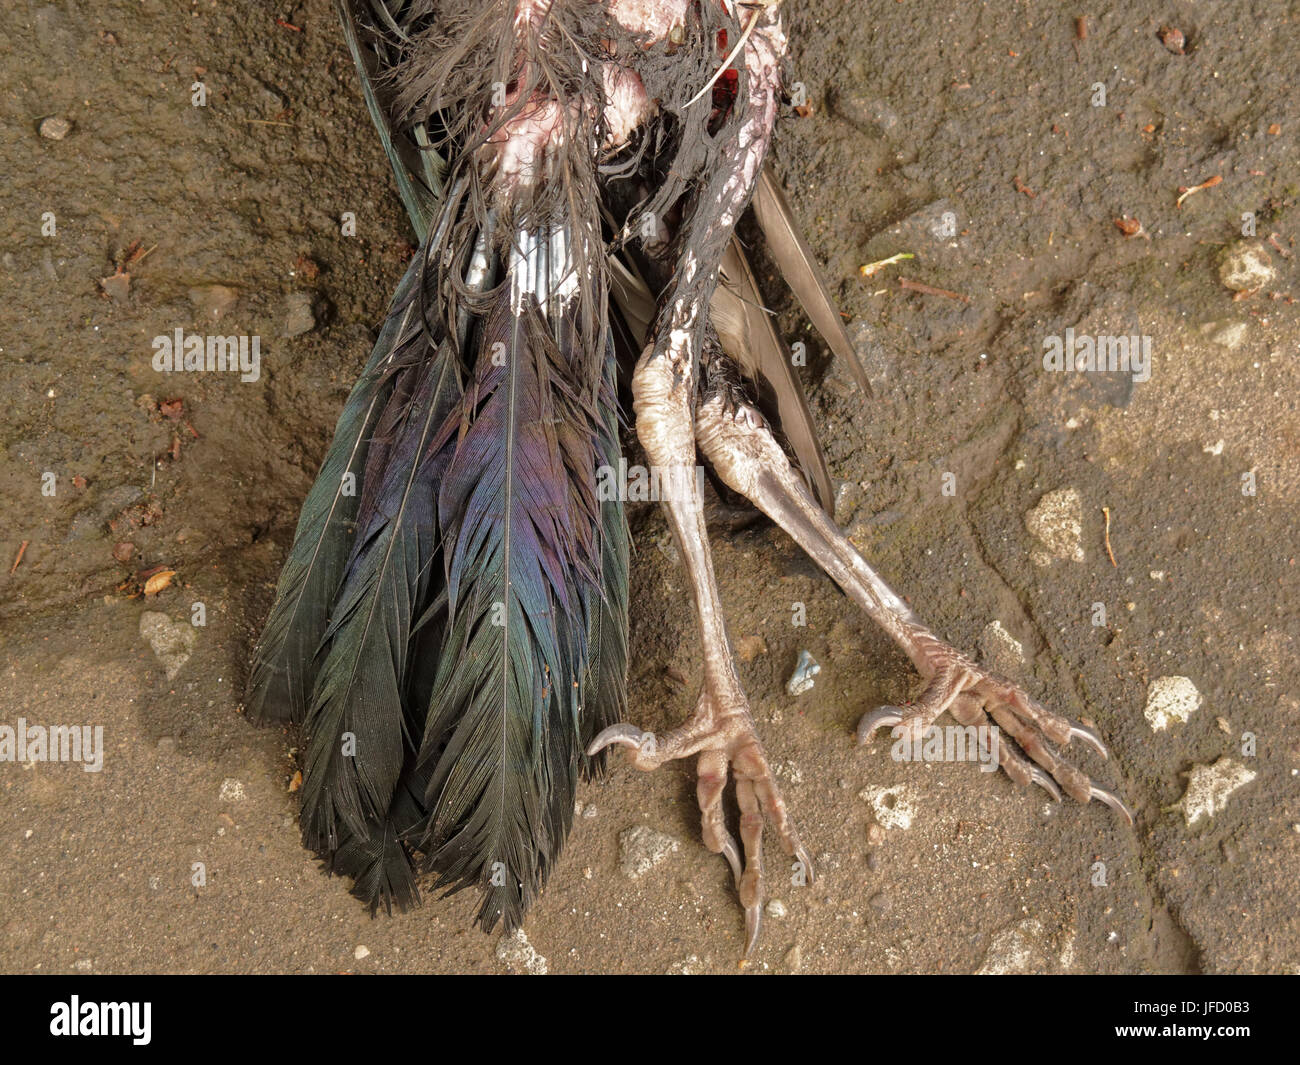 dead bird roadkill putrid decaying carcass beak claws legs Stock Photo